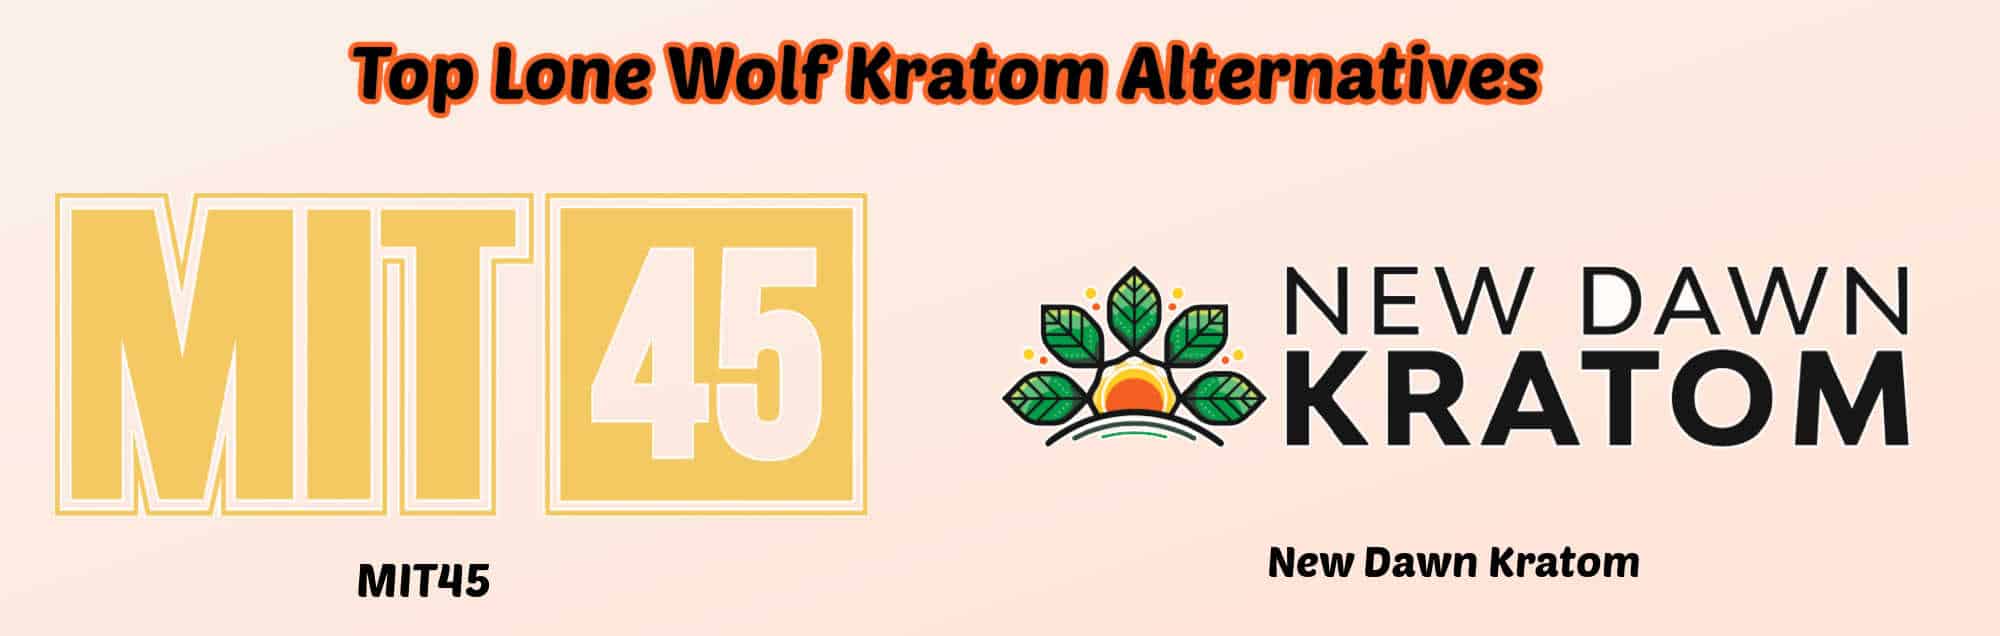 image of top lone wolf kratom alternatives